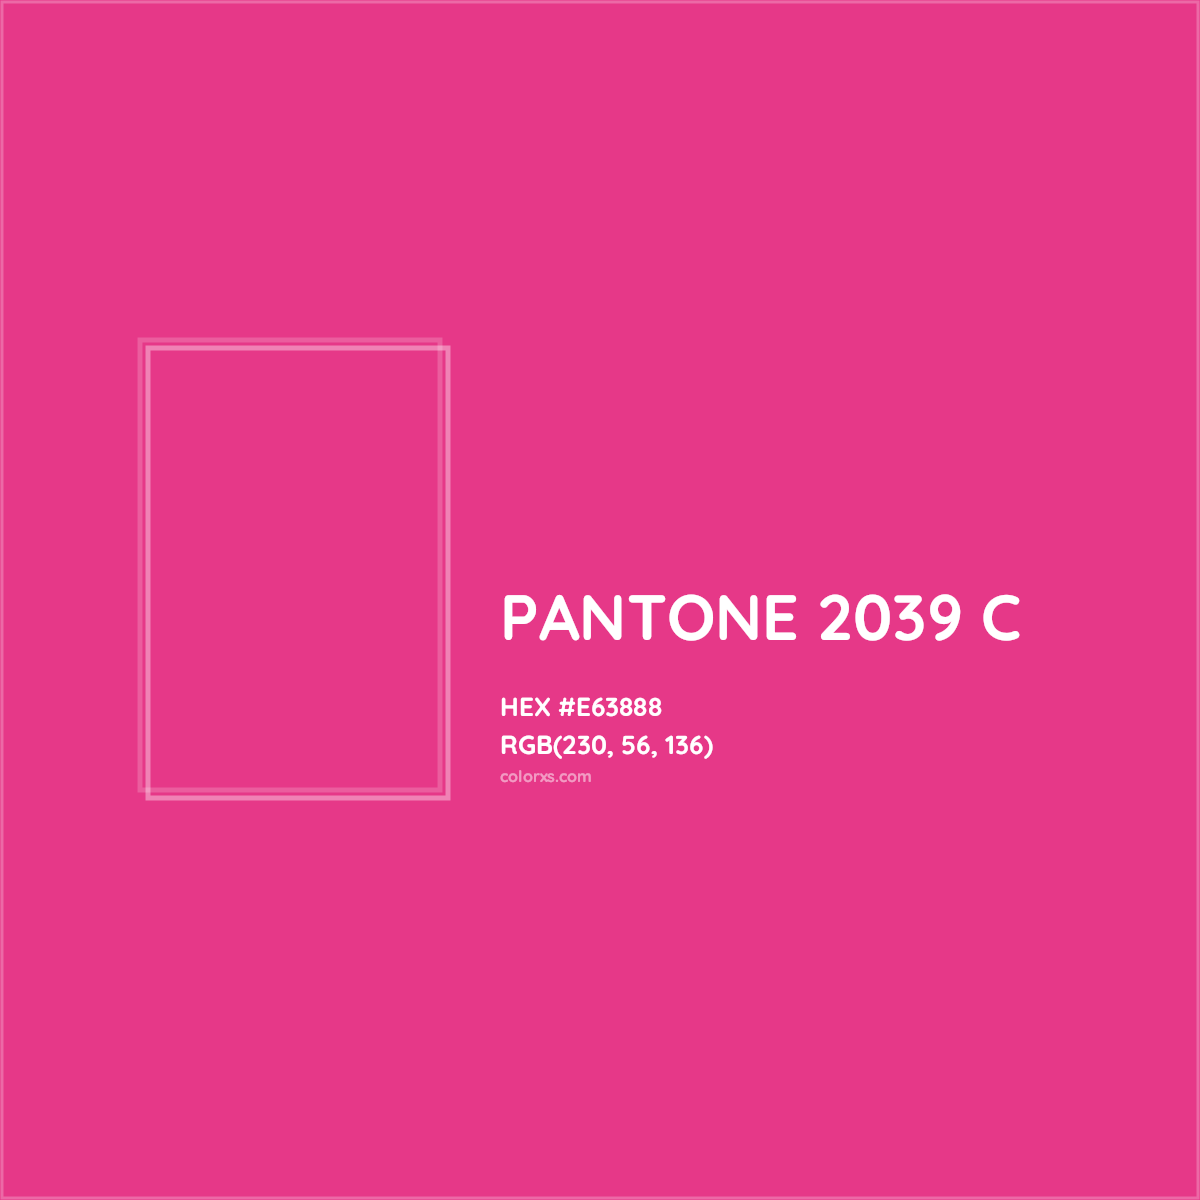 HEX #E63888 PANTONE 2039 C CMS Pantone PMS - Color Code